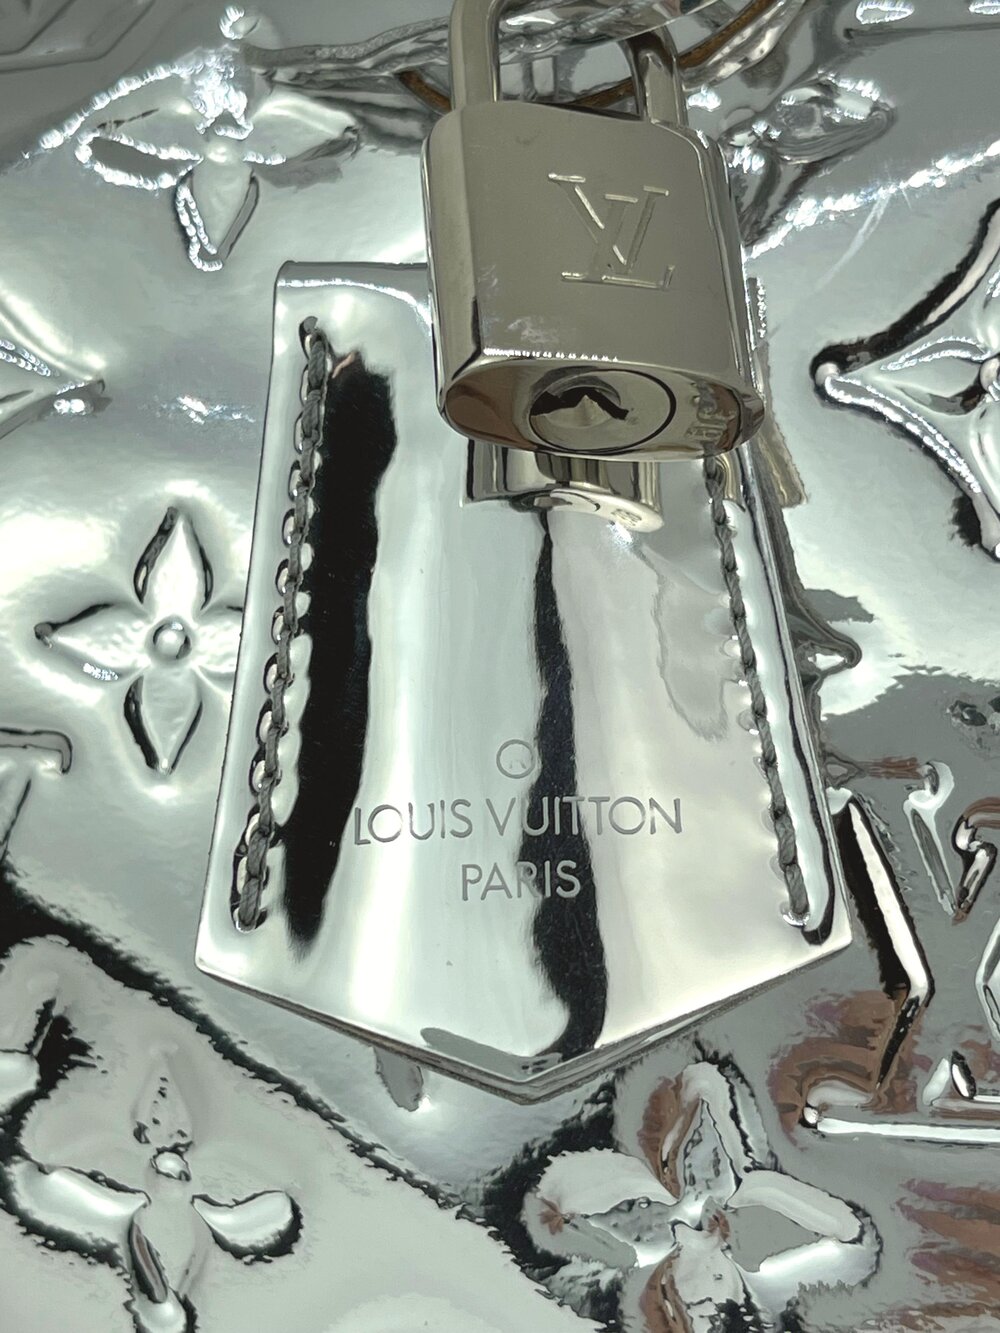 Monogram Miroir Speedy 30 Top Handle Bag in Patent Leather, Silver Hardware